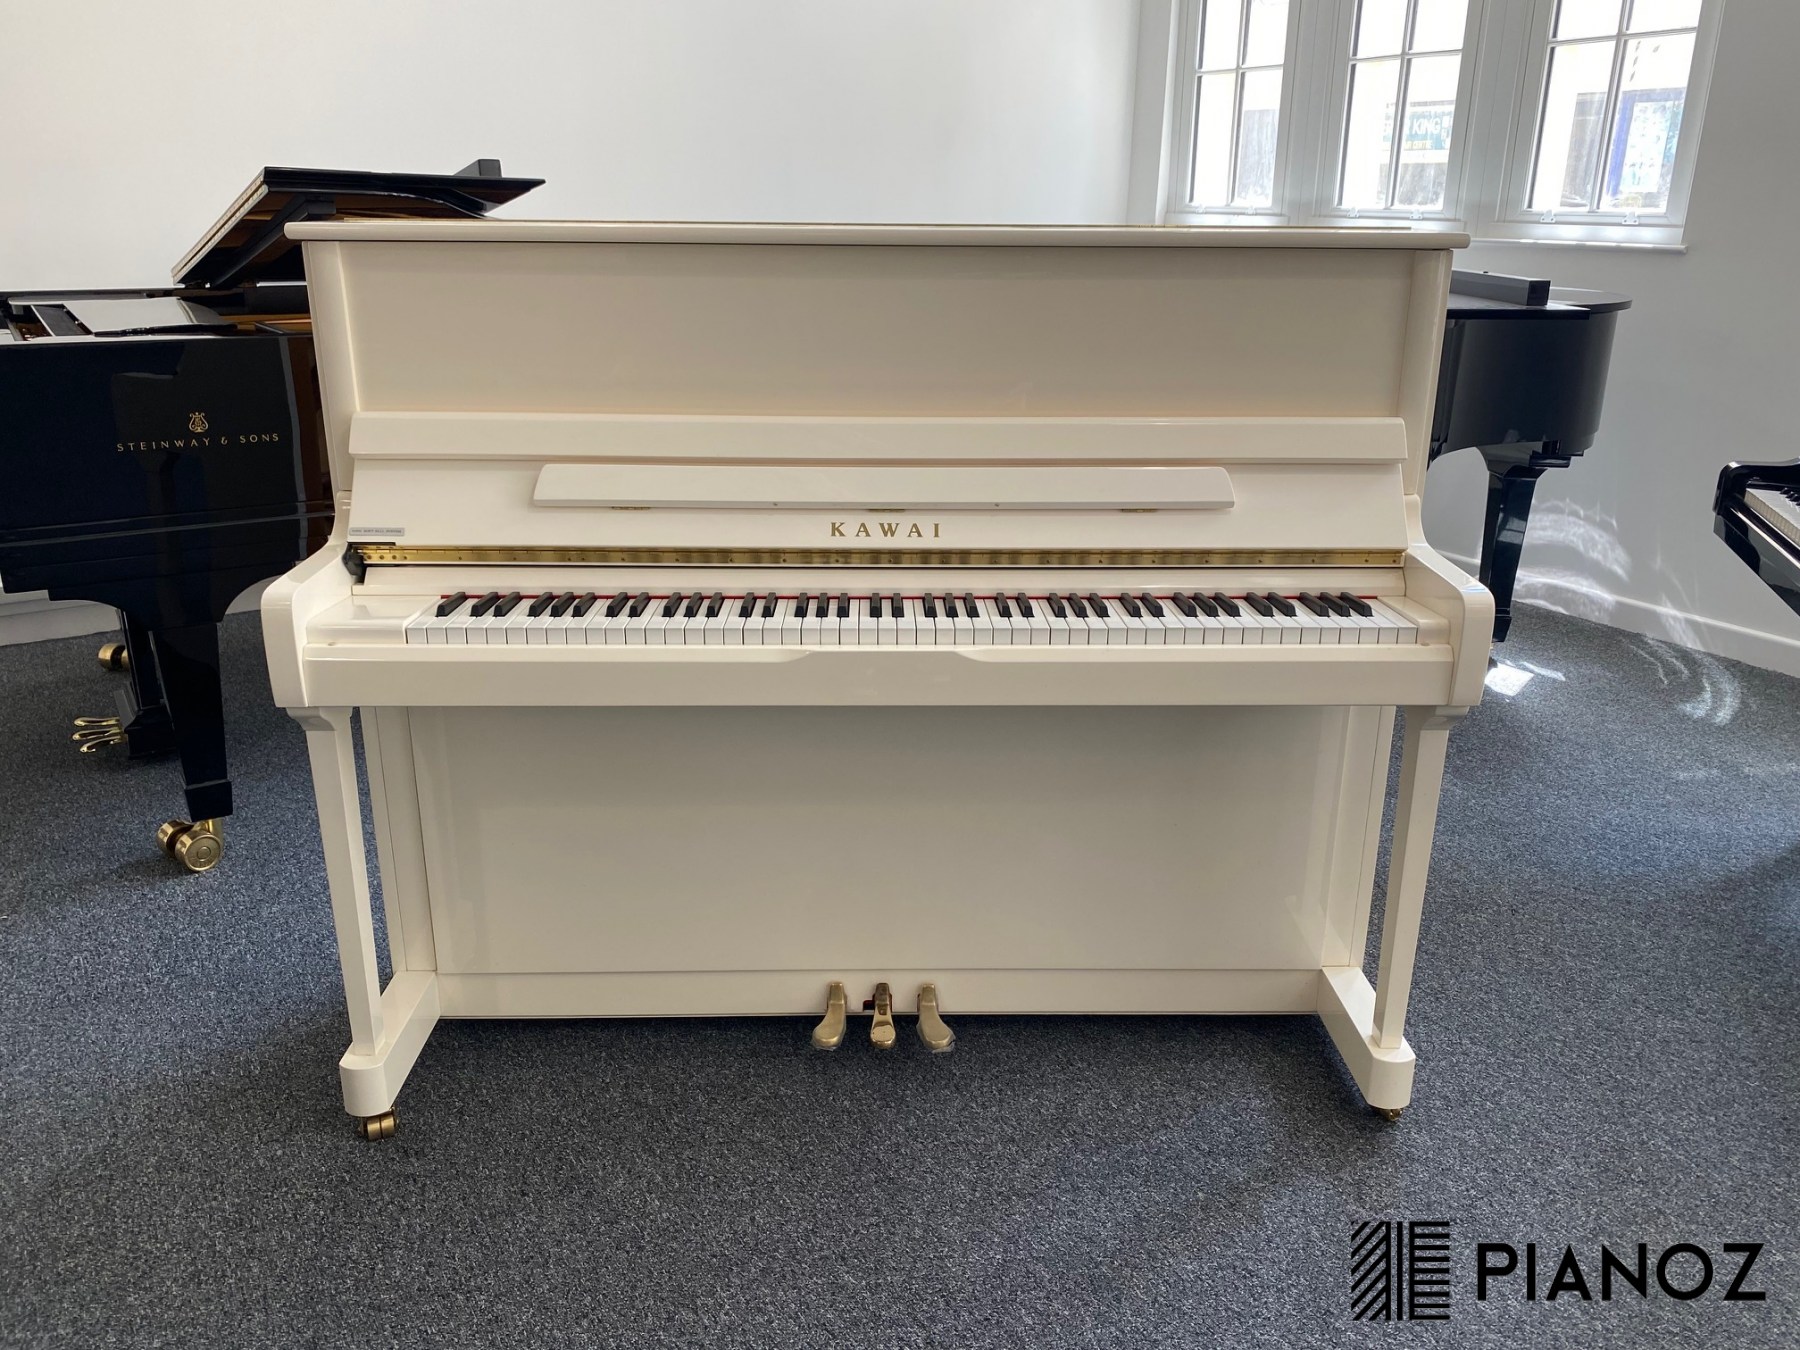 Kawai K3 K300 Upright Piano piano for sale in UK